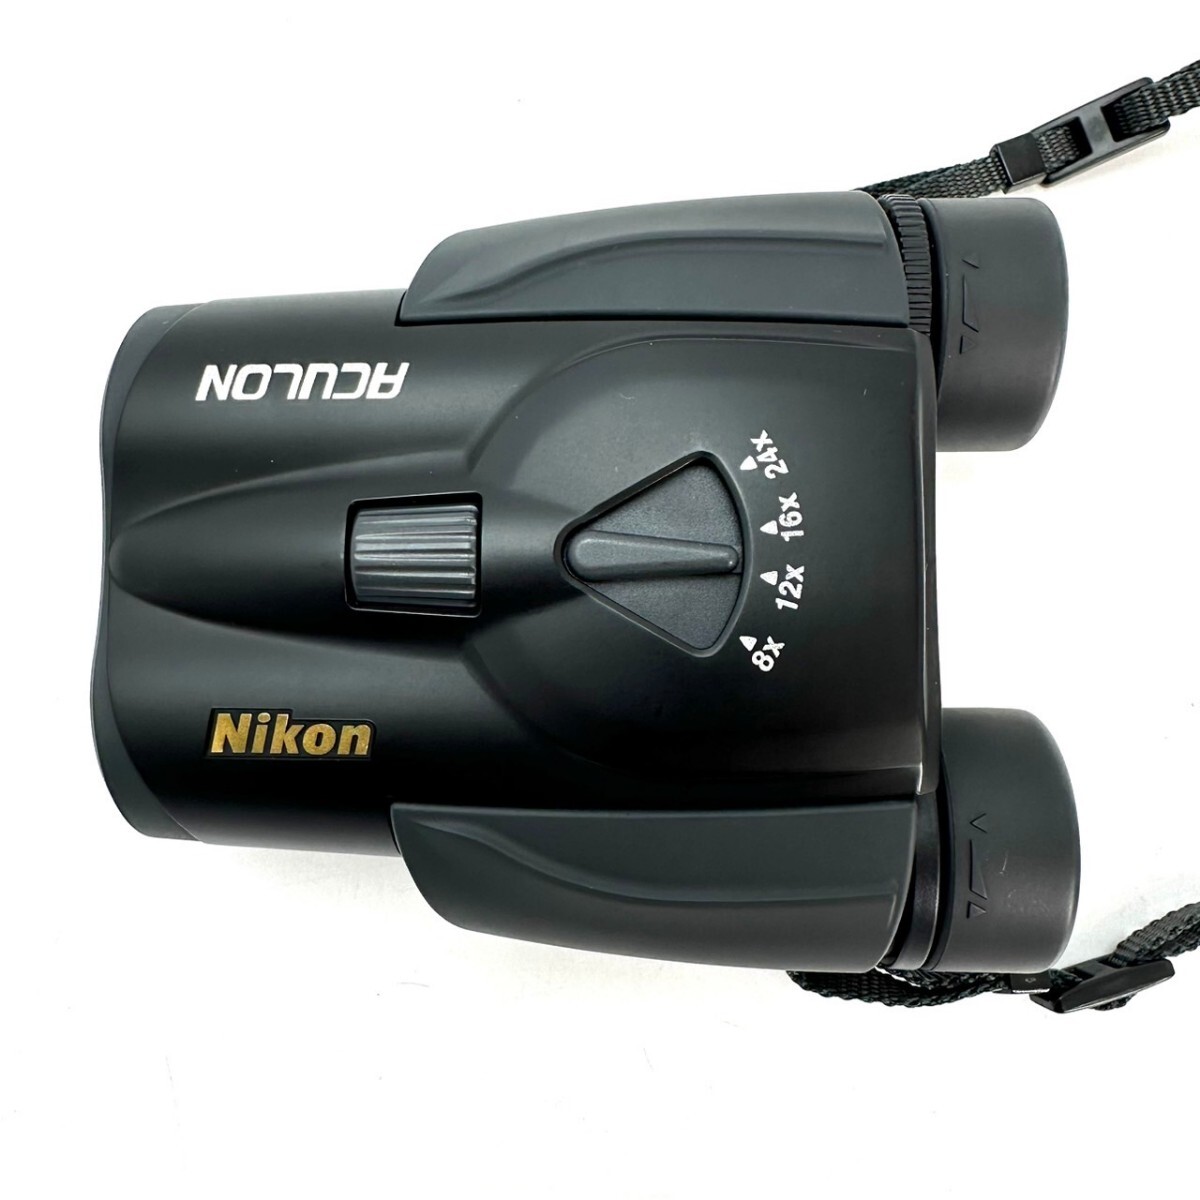 KA★1円〜 双眼鏡 Nikon ニコン ACULON T11 8-24×25 4.6° at 8x ZOOM ストラップ レンズキャップ ケース付_画像2